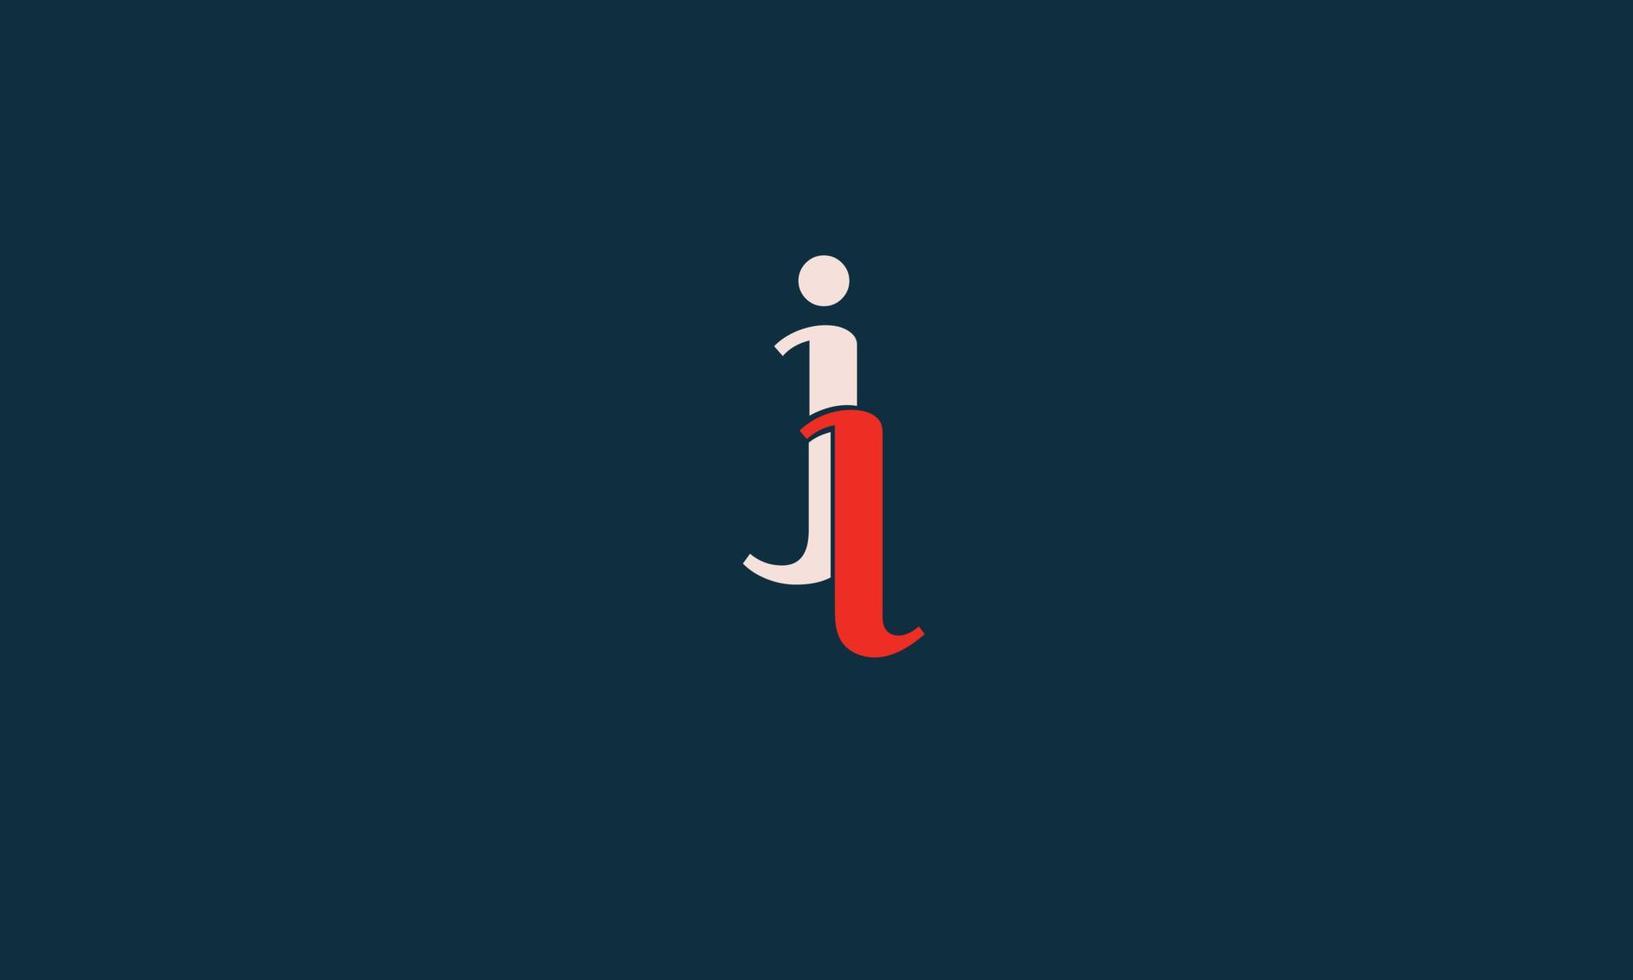 alfabet letters initialen monogram logo jl, lj, j en l vector